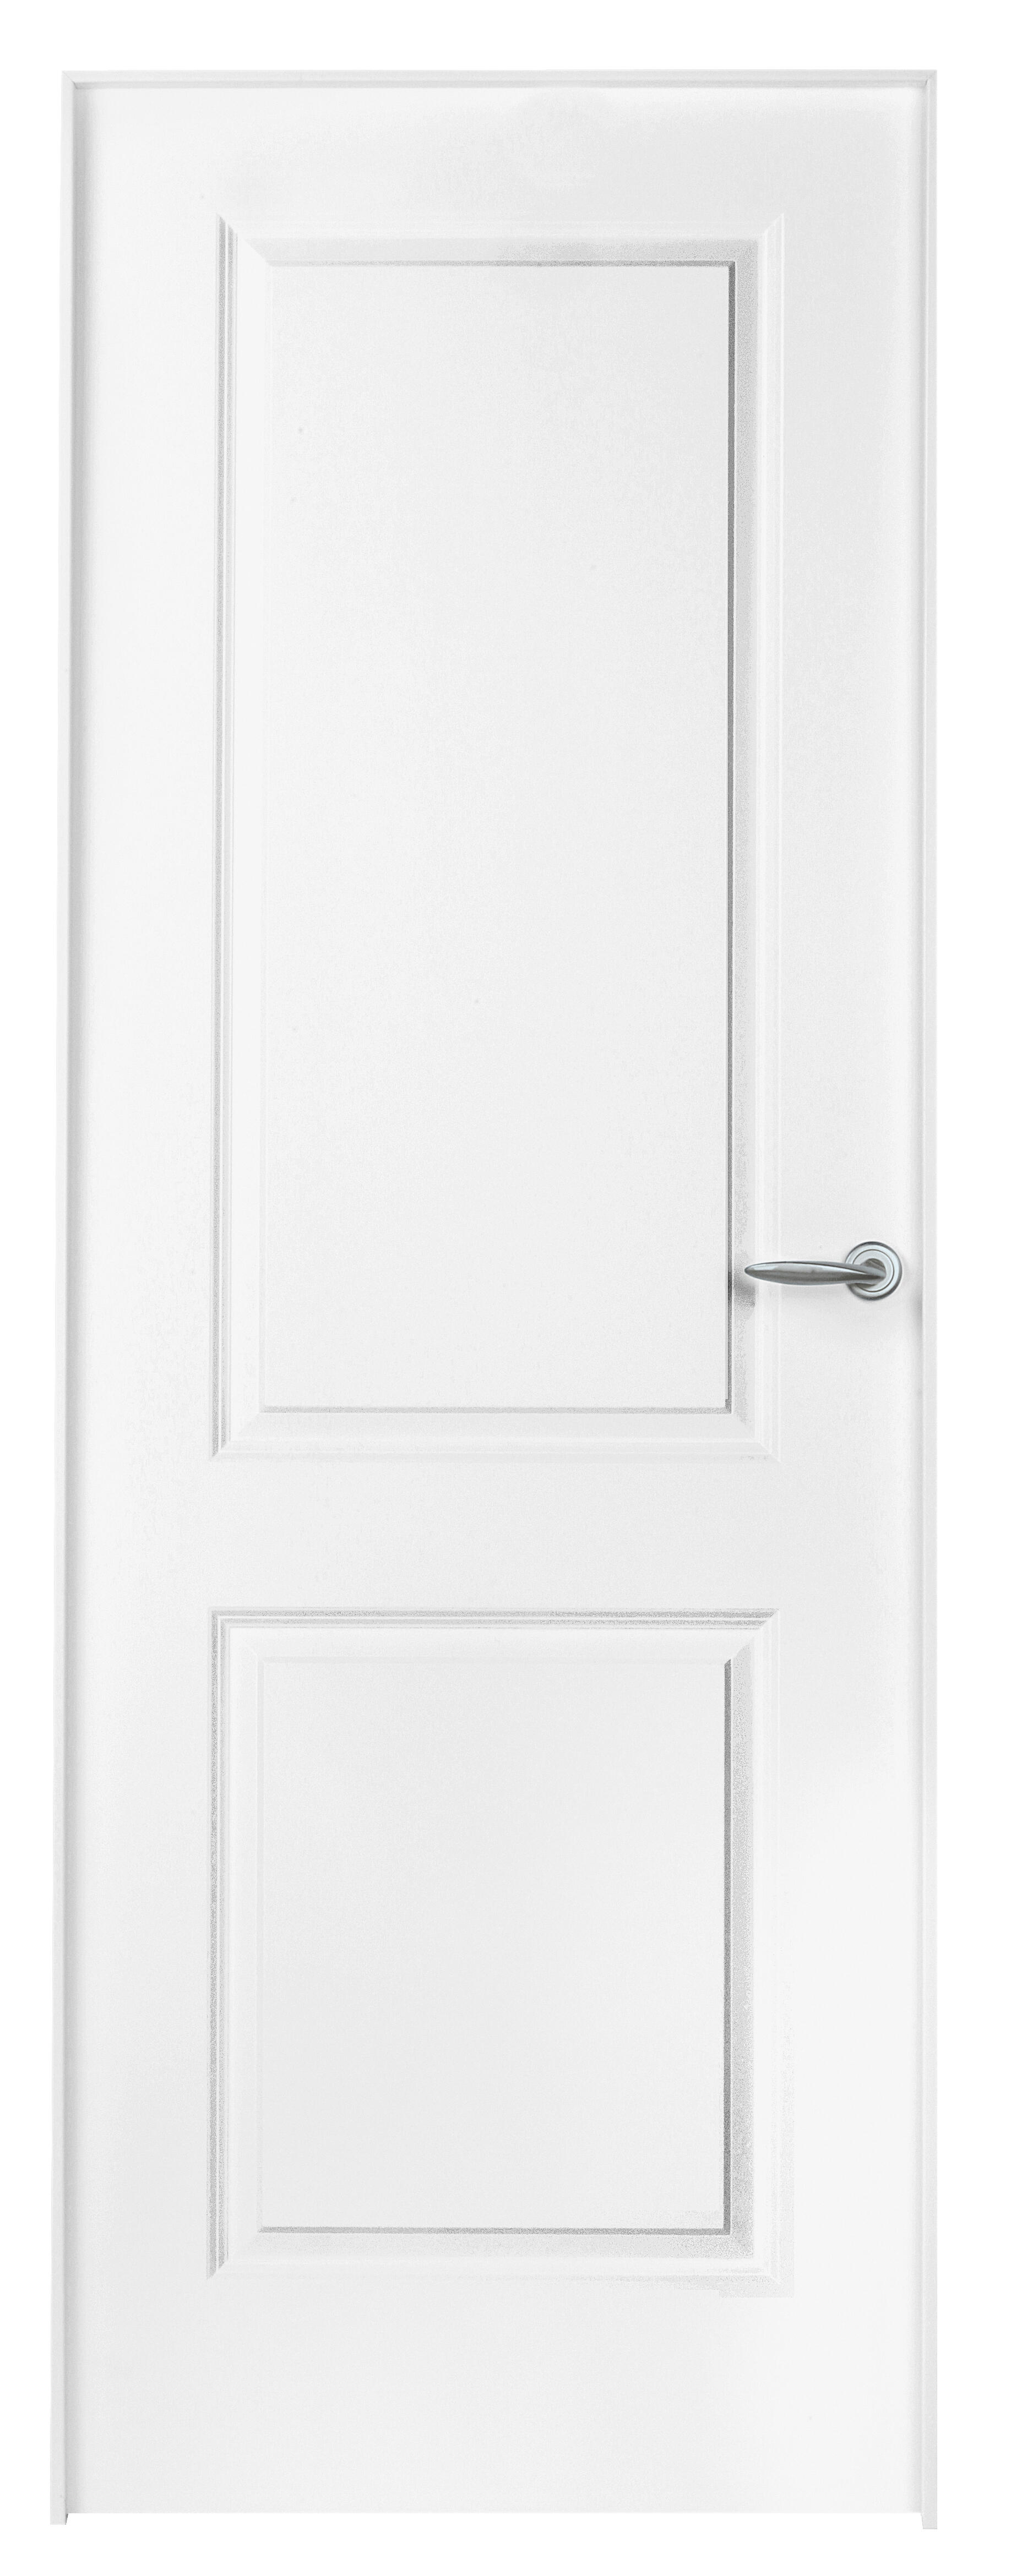 Puerta bonn blanco apertura izquierda 82.5cm